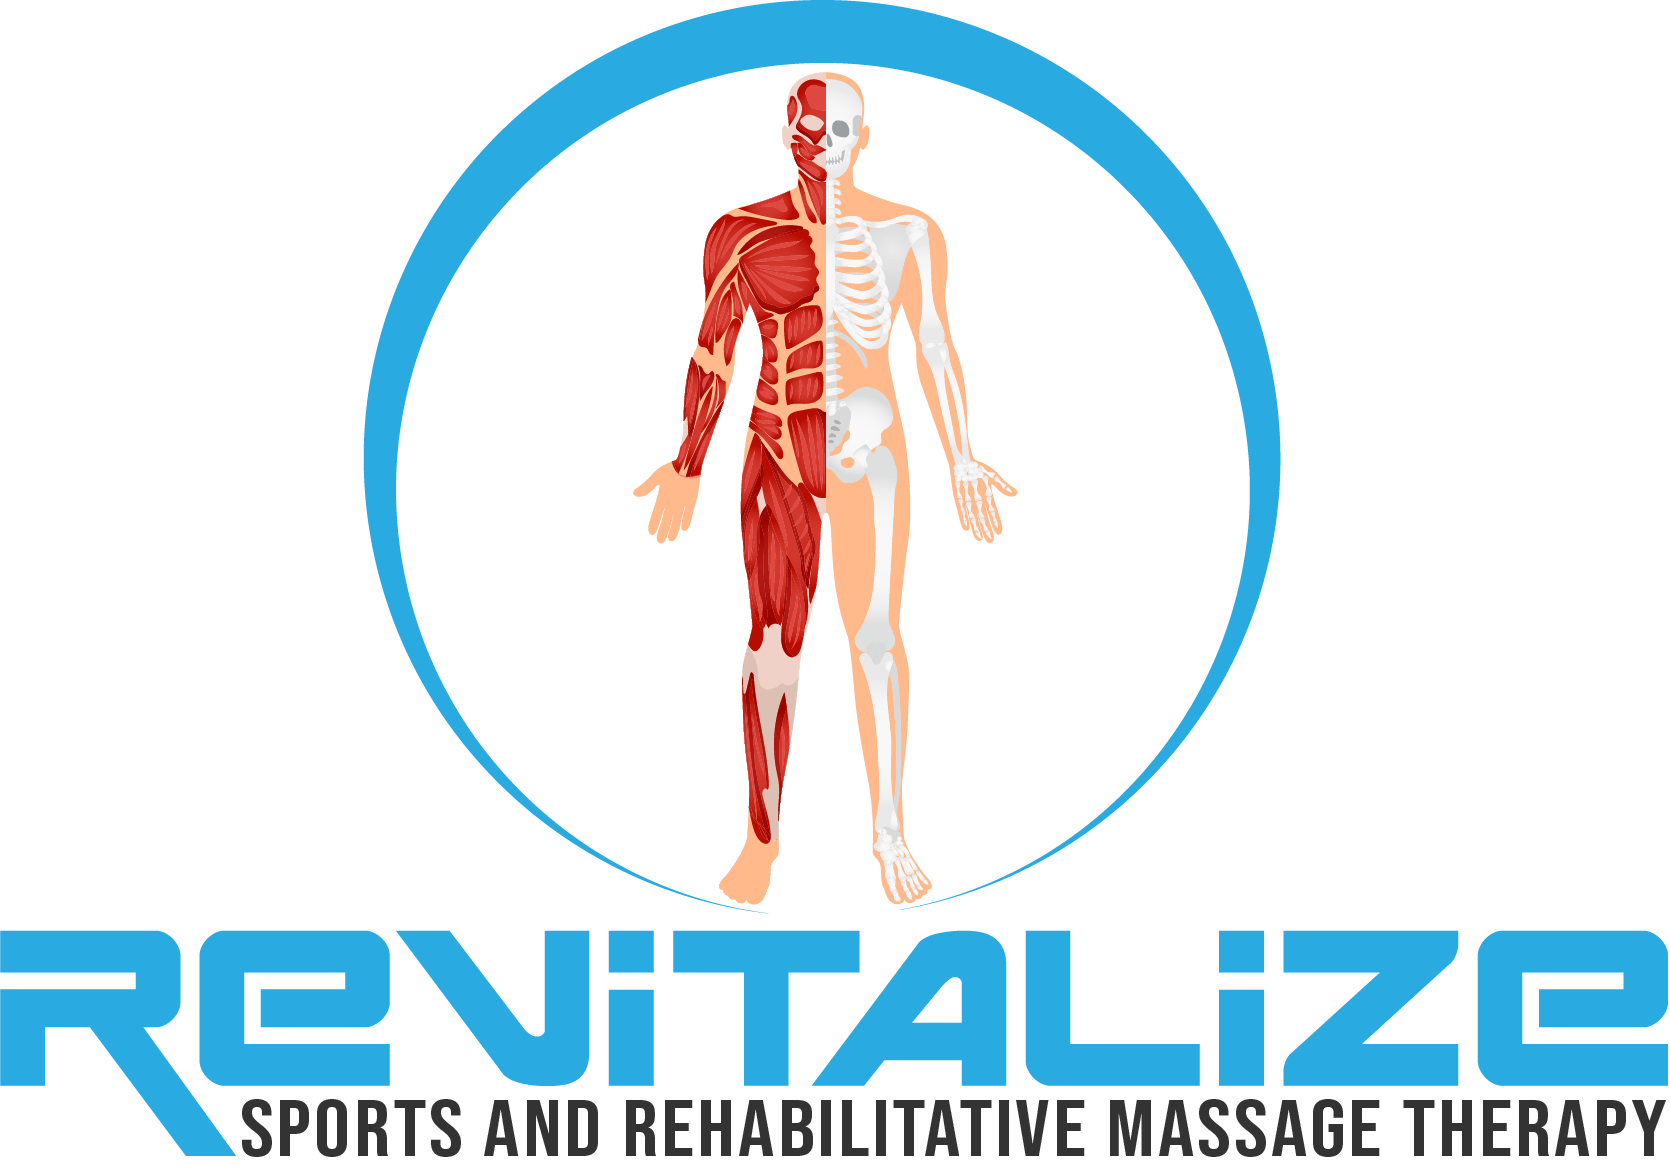 Revitalize Sports And Rehabilitative Massage Therapy